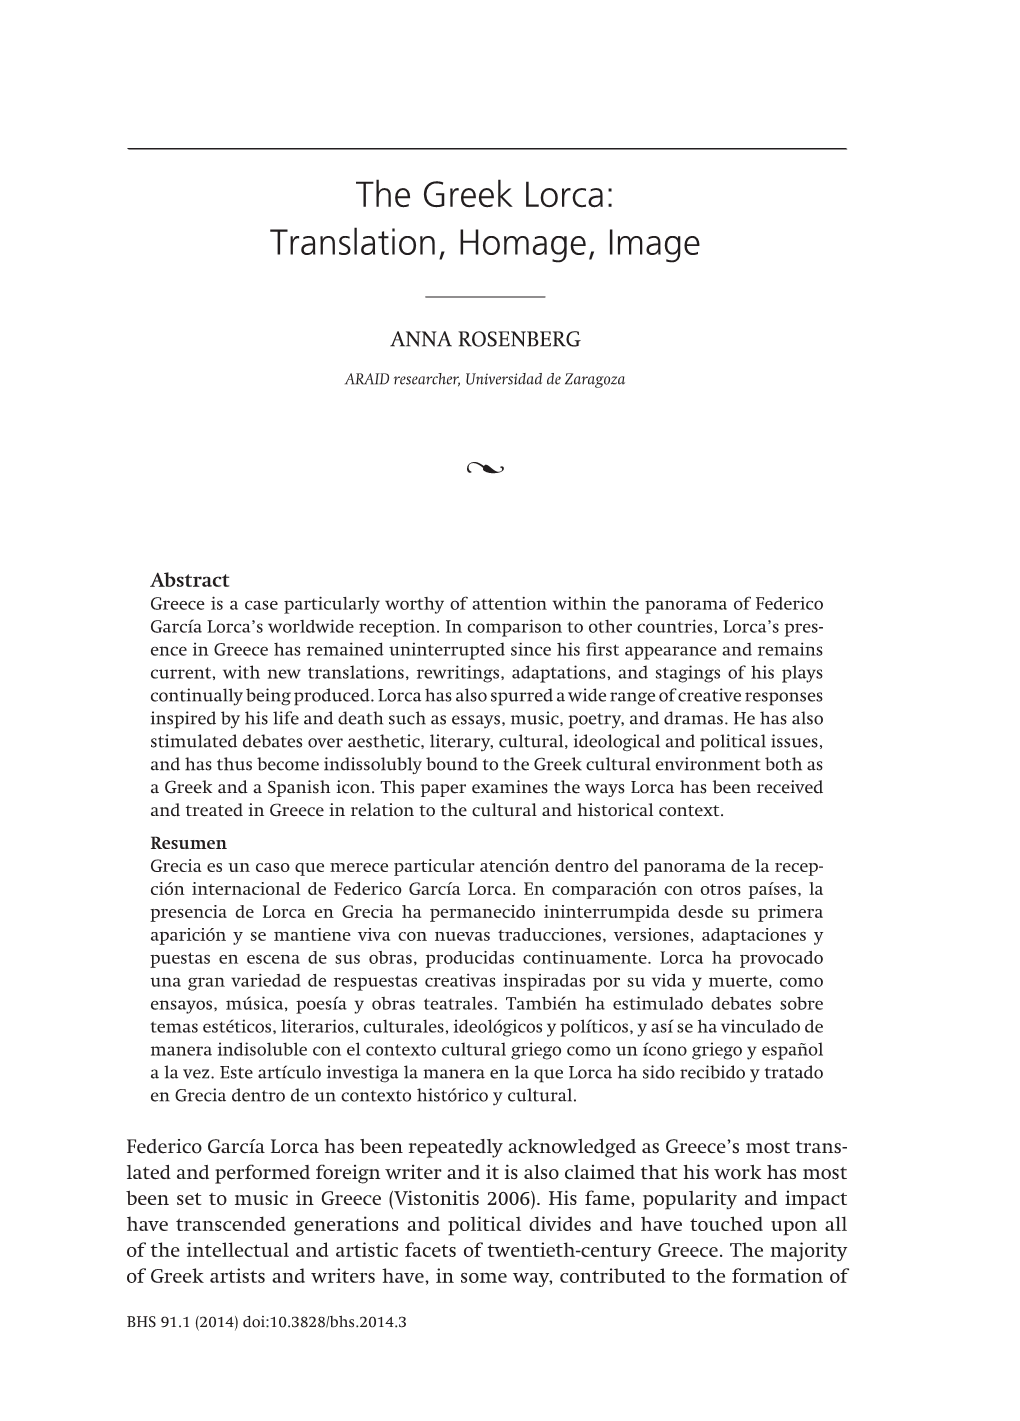 The Greek Lorca: Translation, Homage, Image